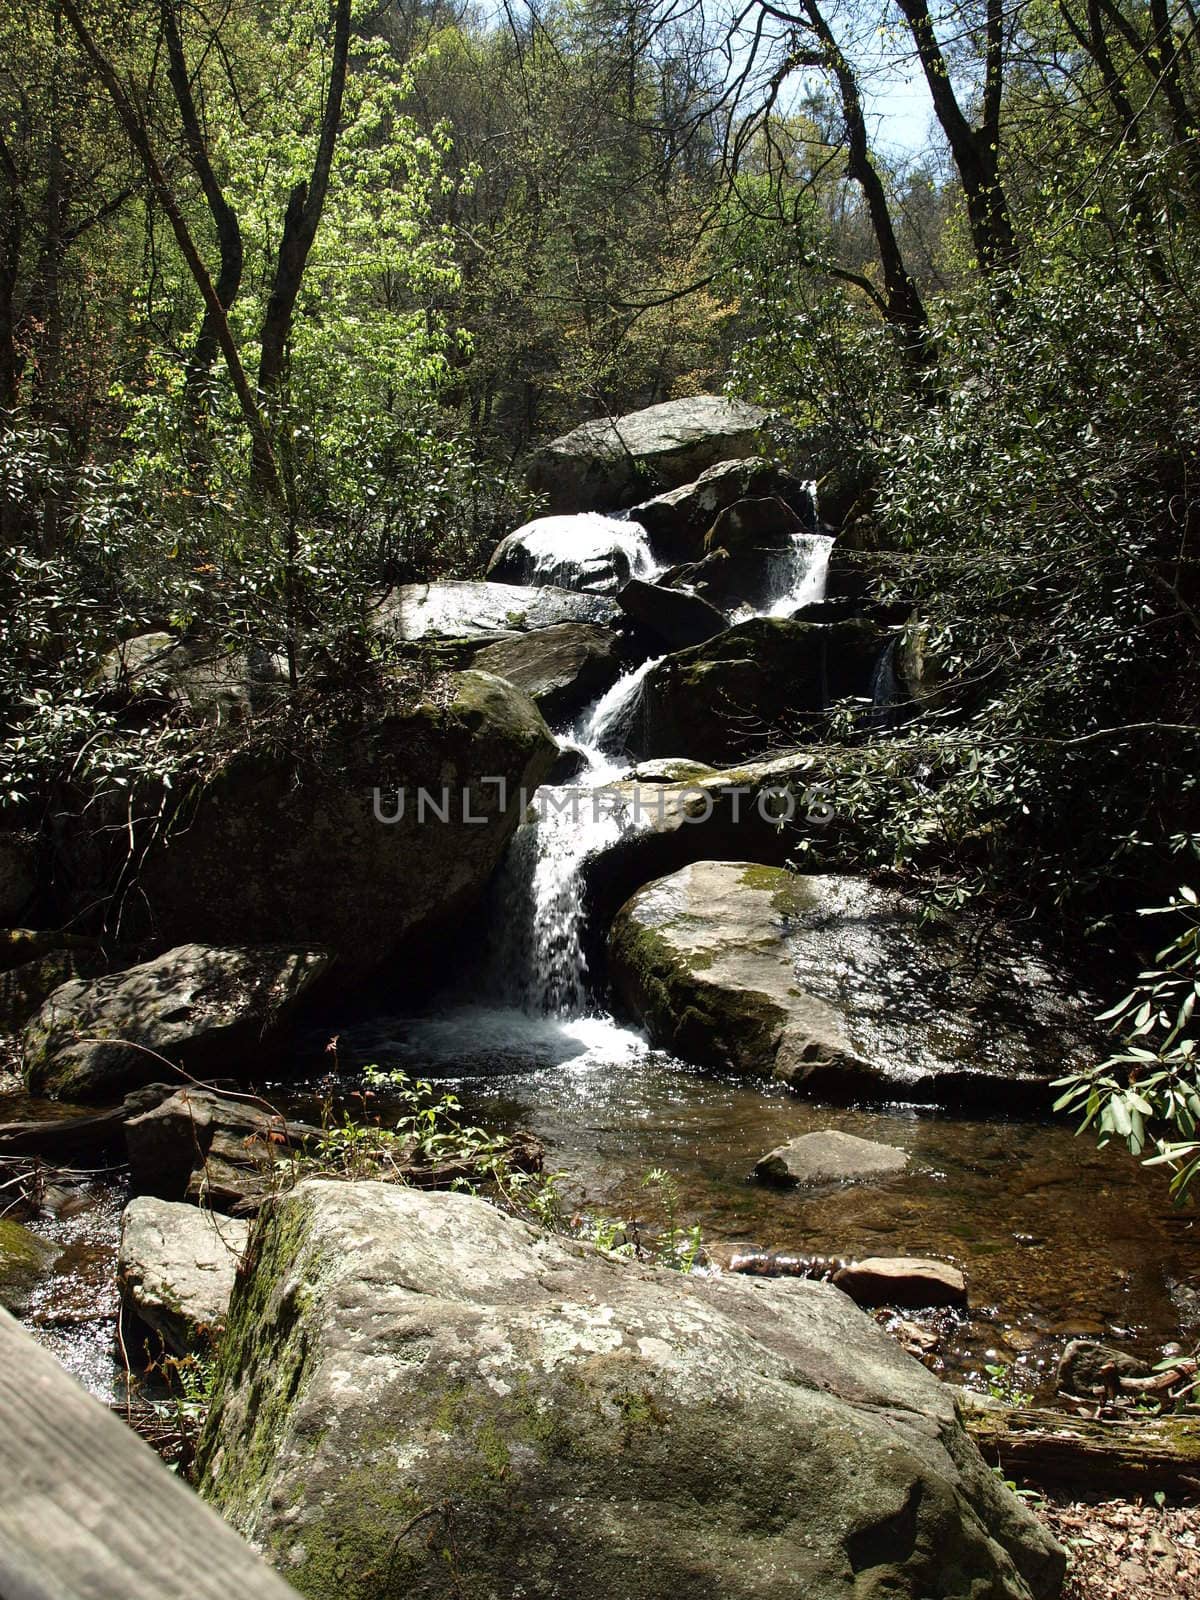 A fast flowing stream in rural North Carolina